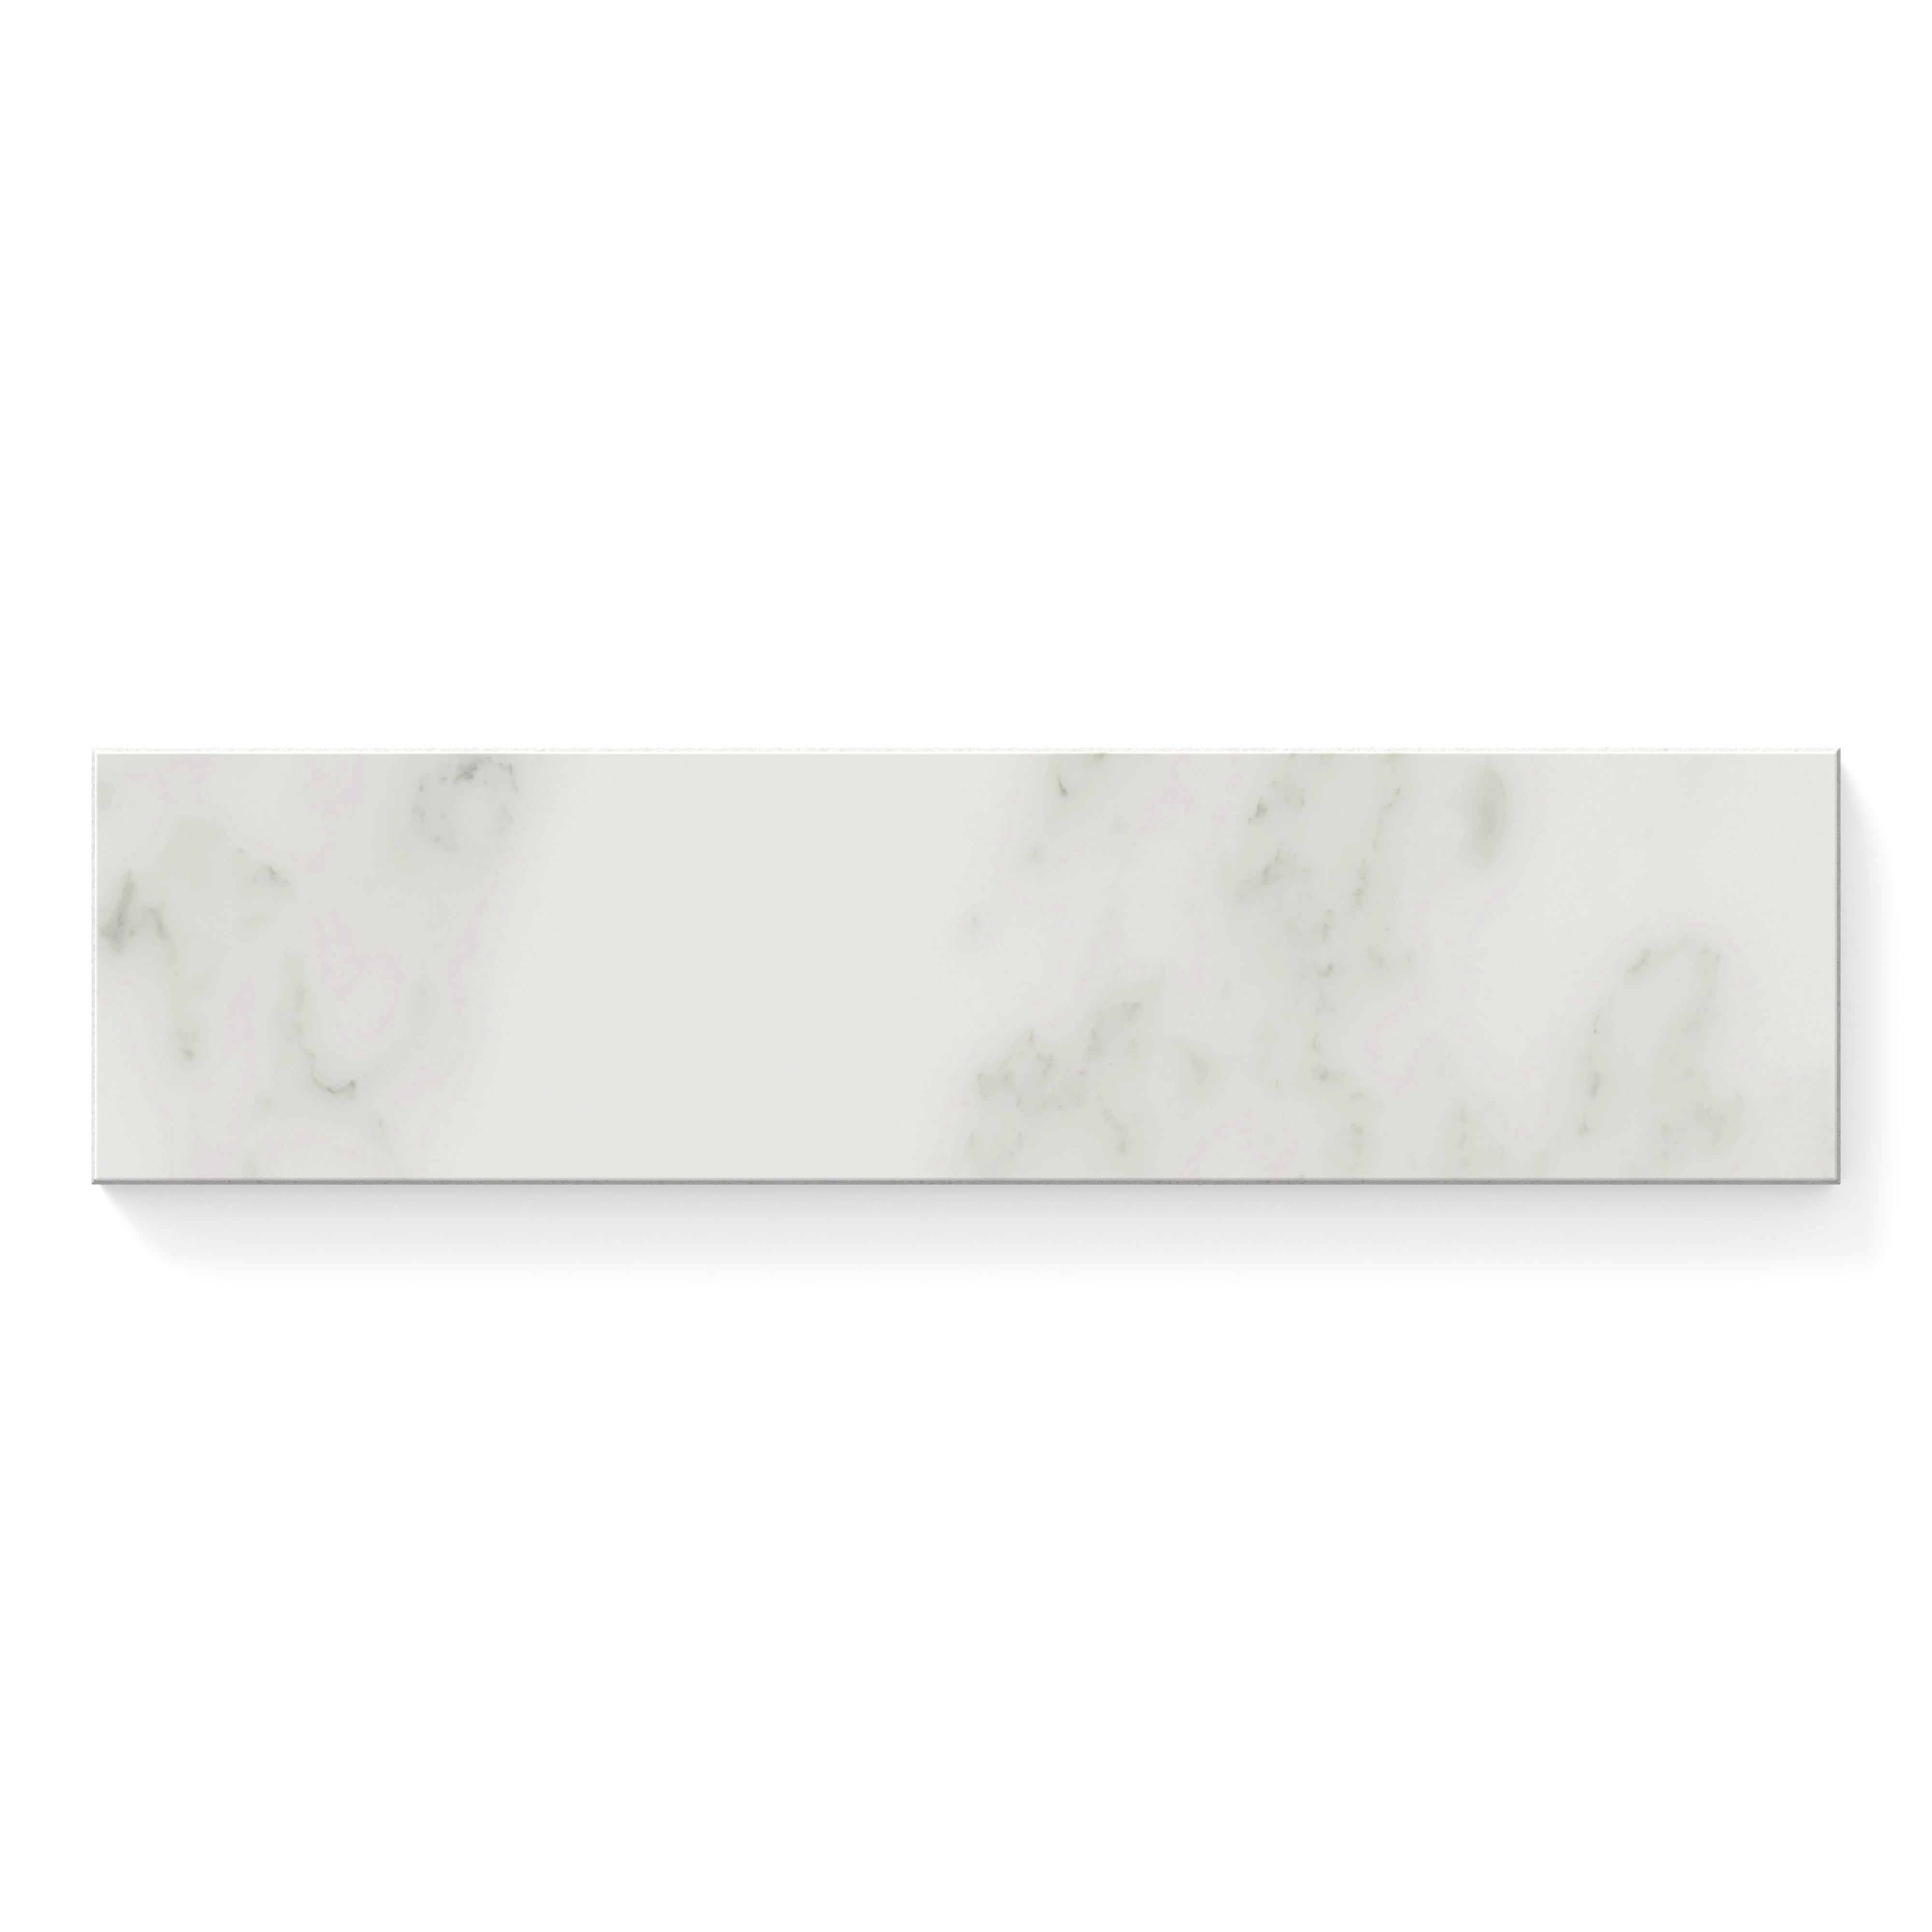 Aniston 3x12 Polished Porcelain Tile in Carrara Bianco